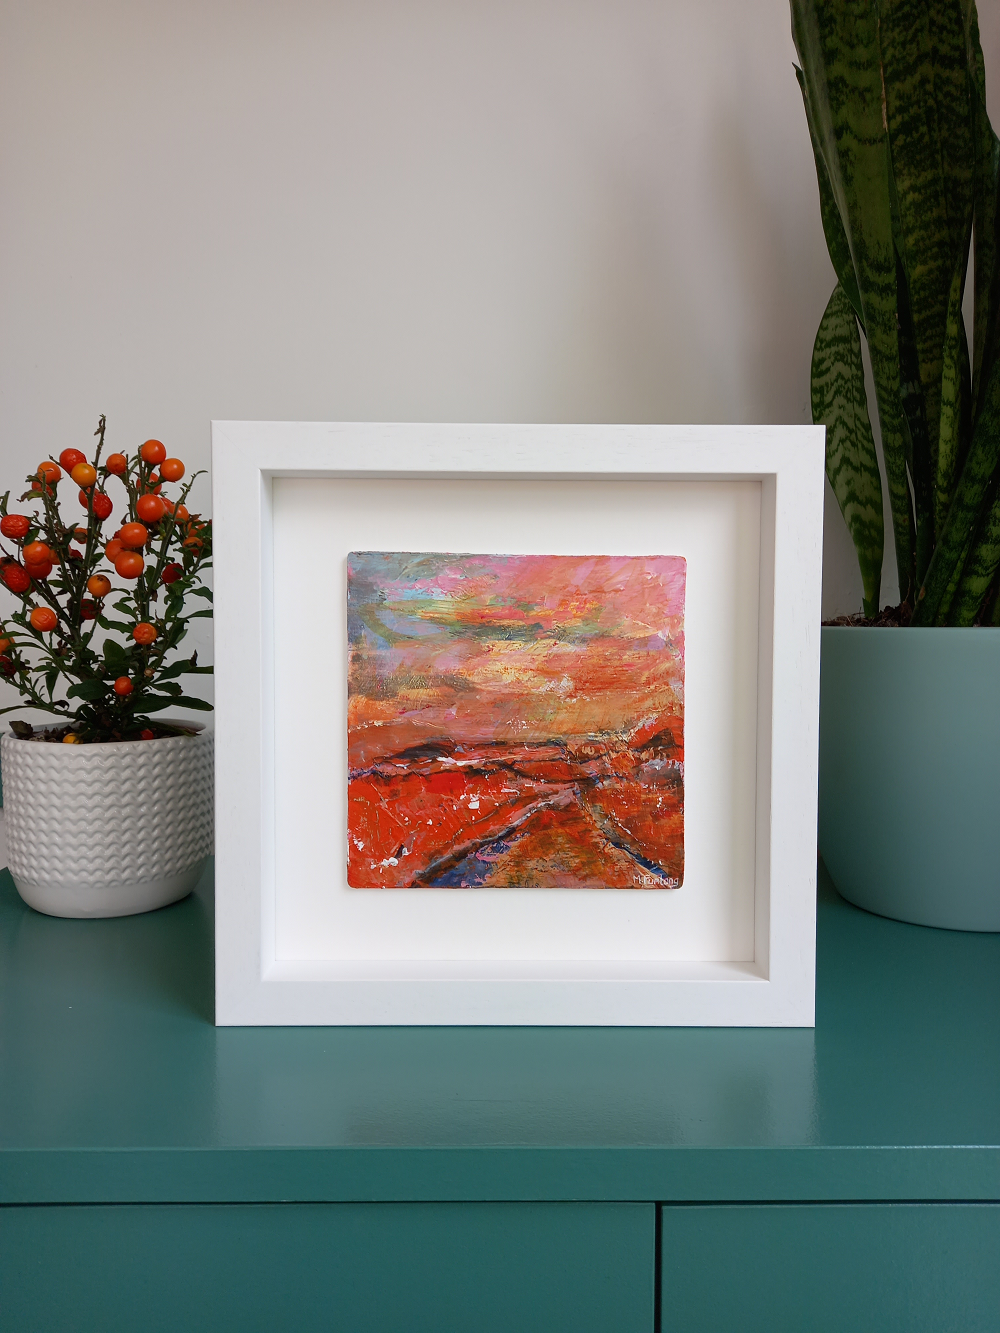 Landscape Study In Orange - original acrylic painting on wood (framed)